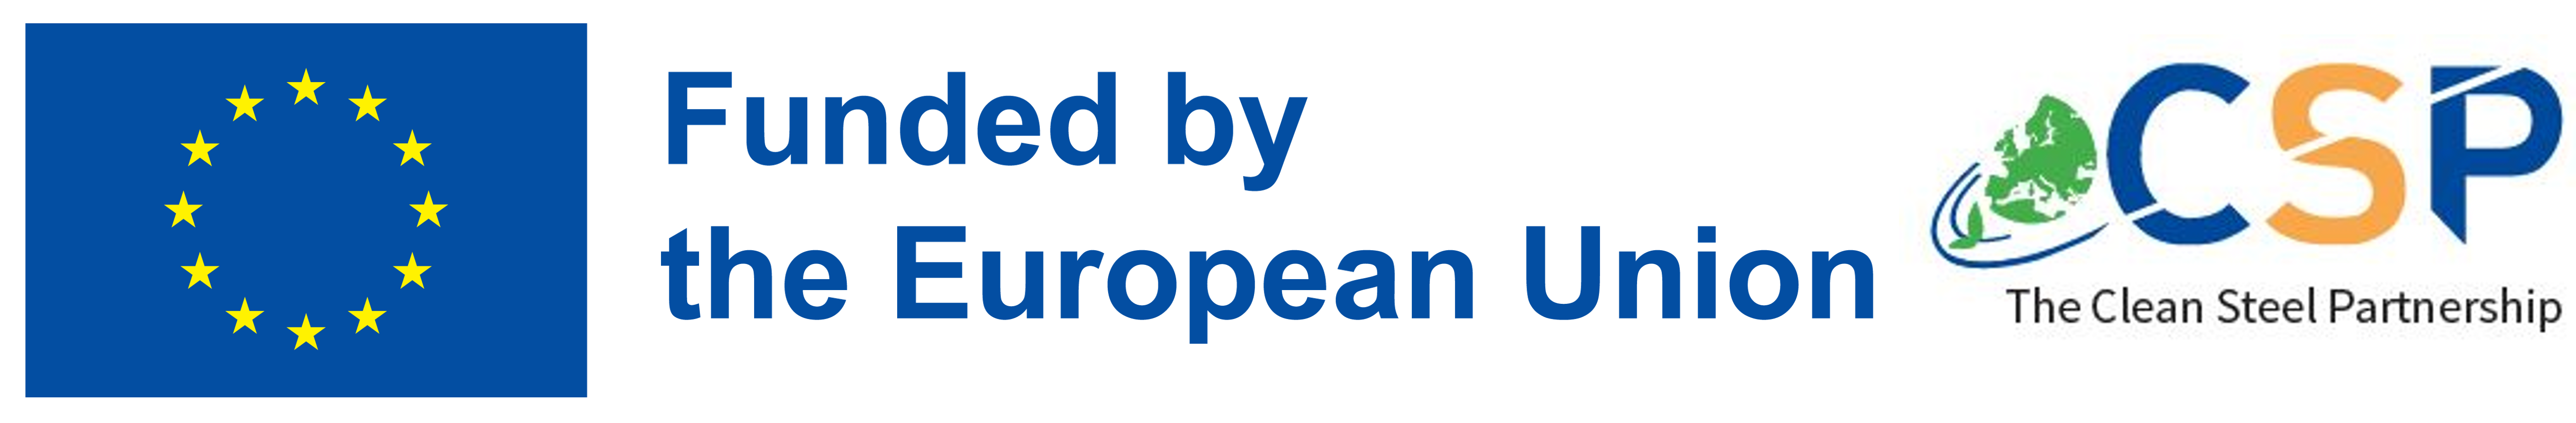 Supporters European Union, Clean Steel Partnership logo